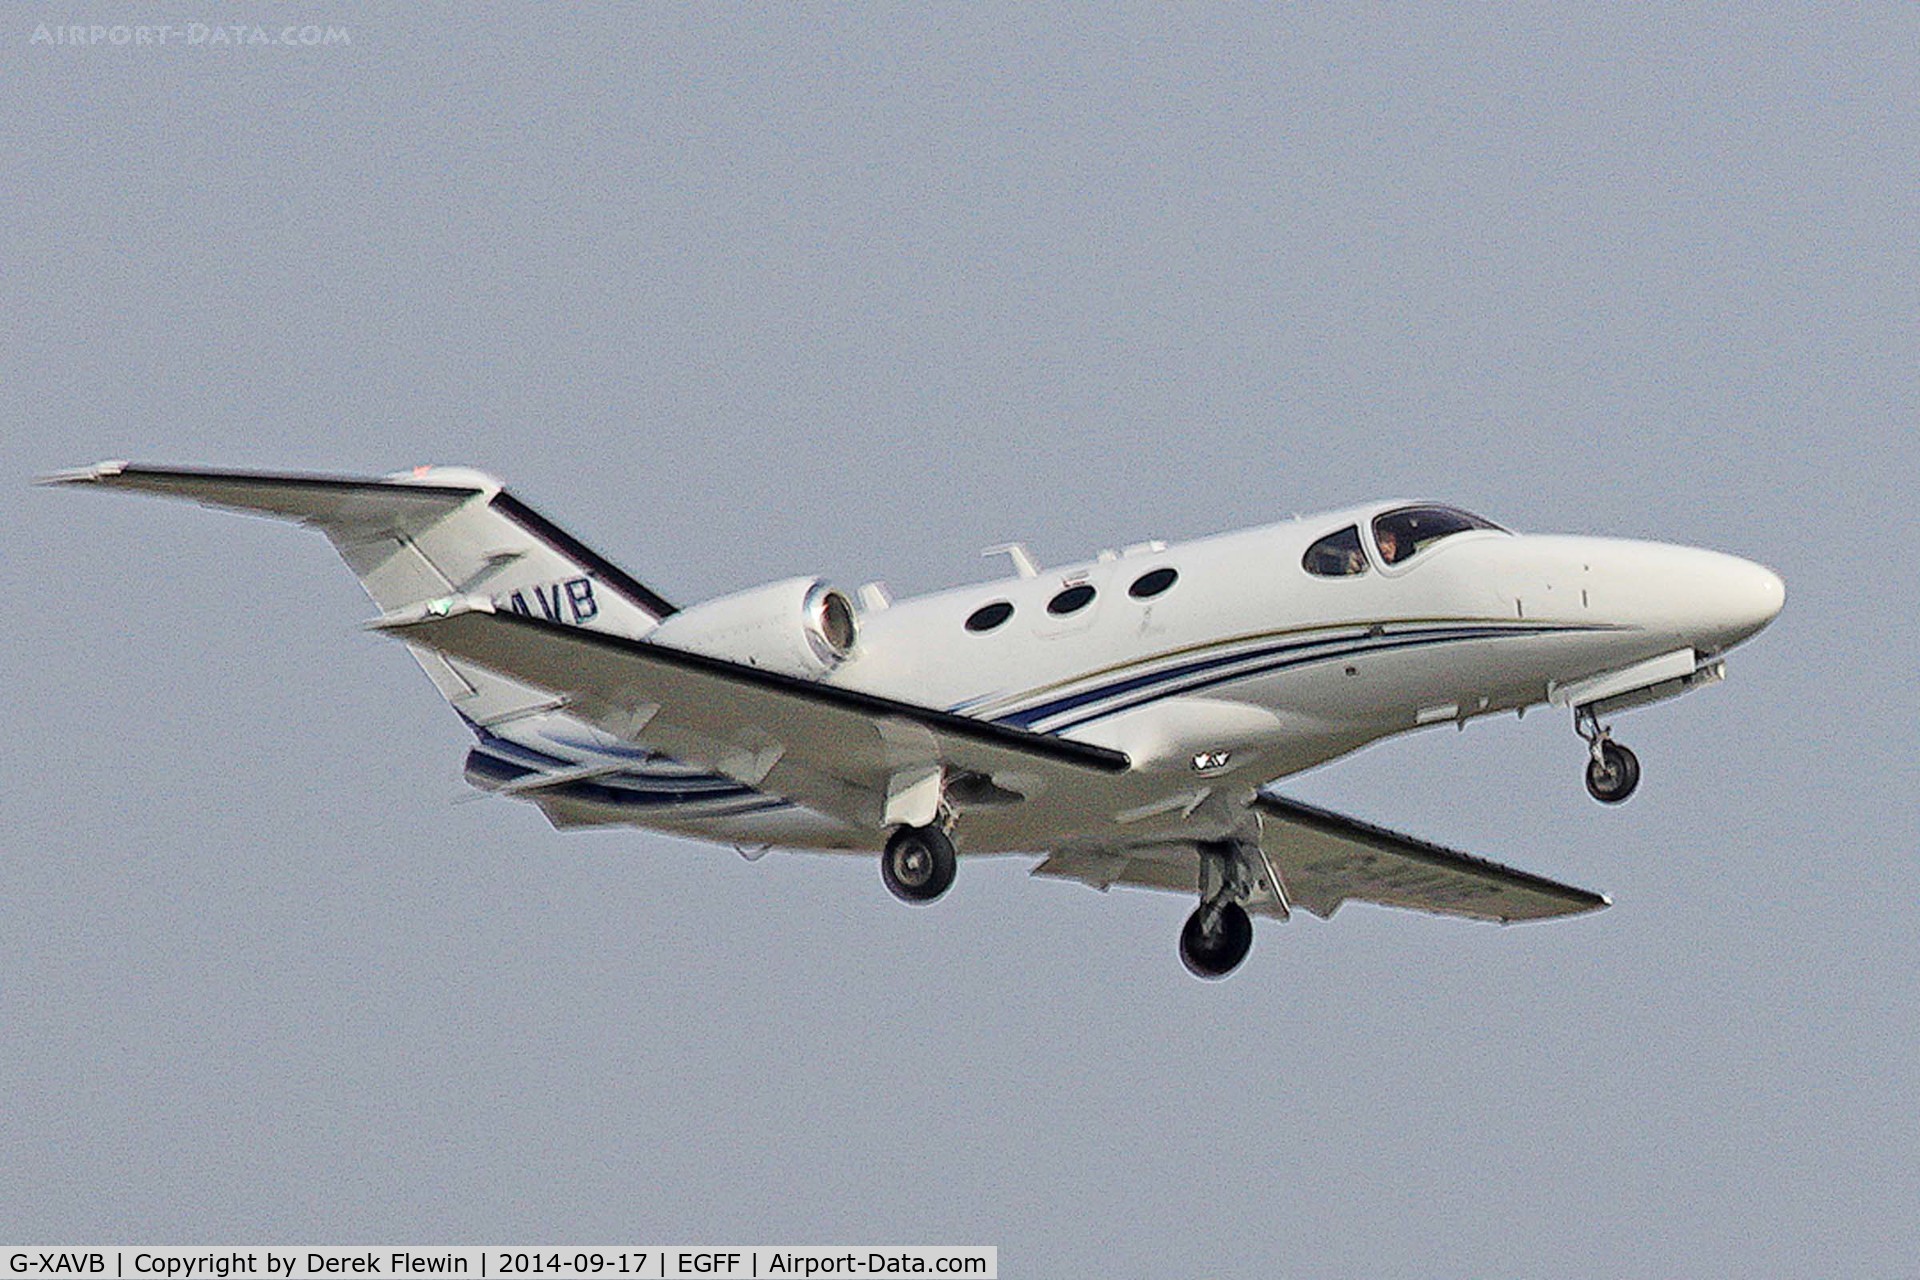 G-XAVB, 2010 Cessna 510 Citation Mustang Citation Mustang C/N 510-0283, Visiting Citation Mustang, Jersey based, callsign Beaupair 5571, seen departing runway 12 at EGFF, en-route to Jersey.